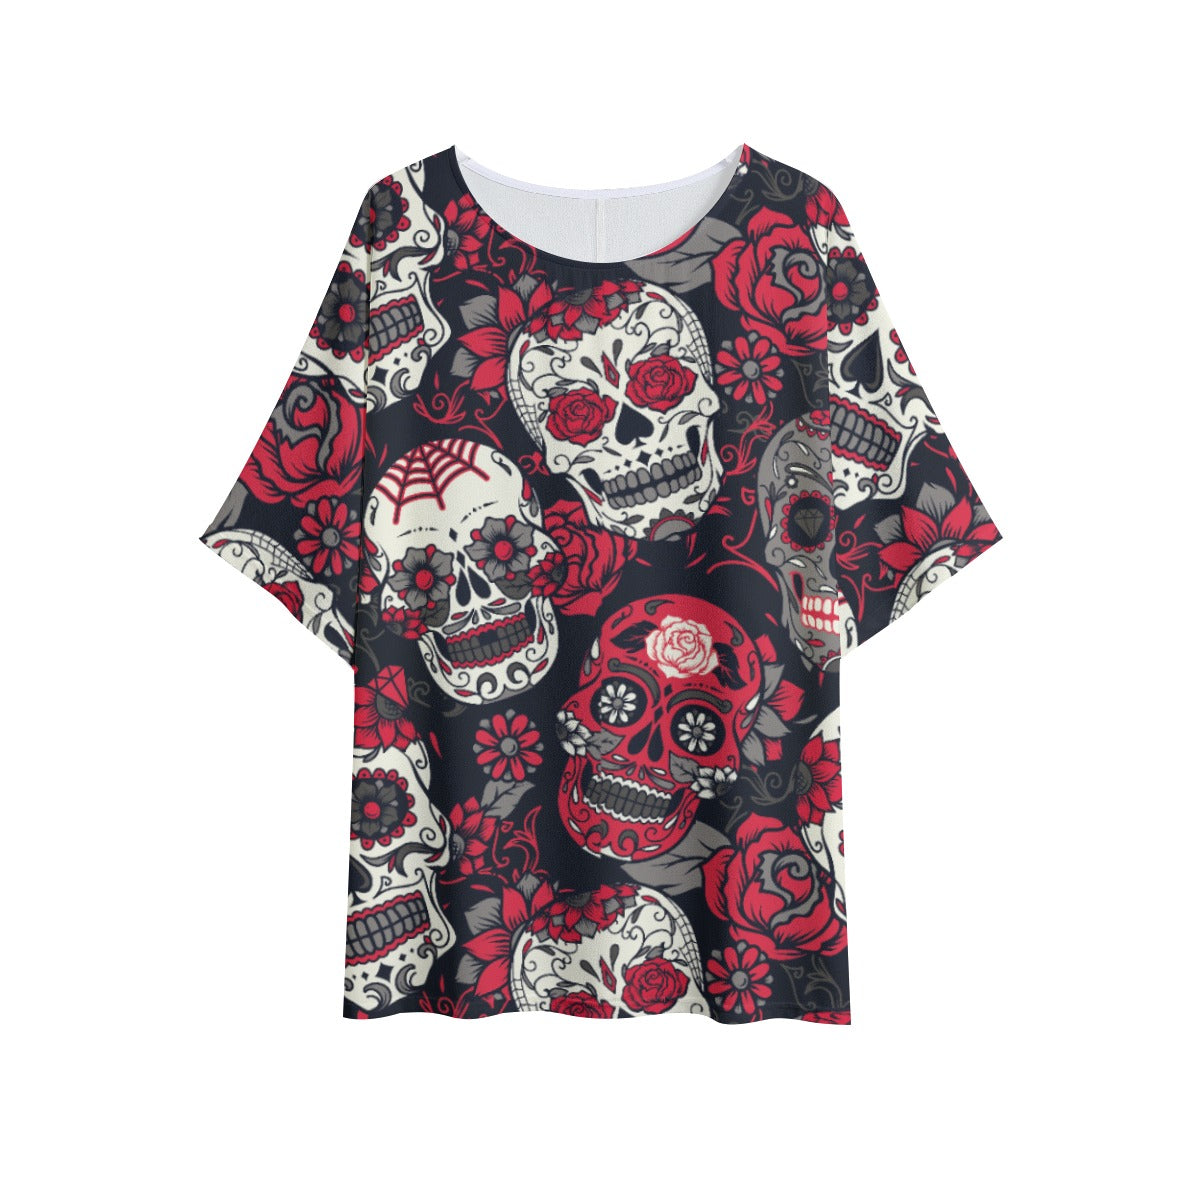 Sugar skull All-Over Print Women's T-shirt with Bat Sleeve